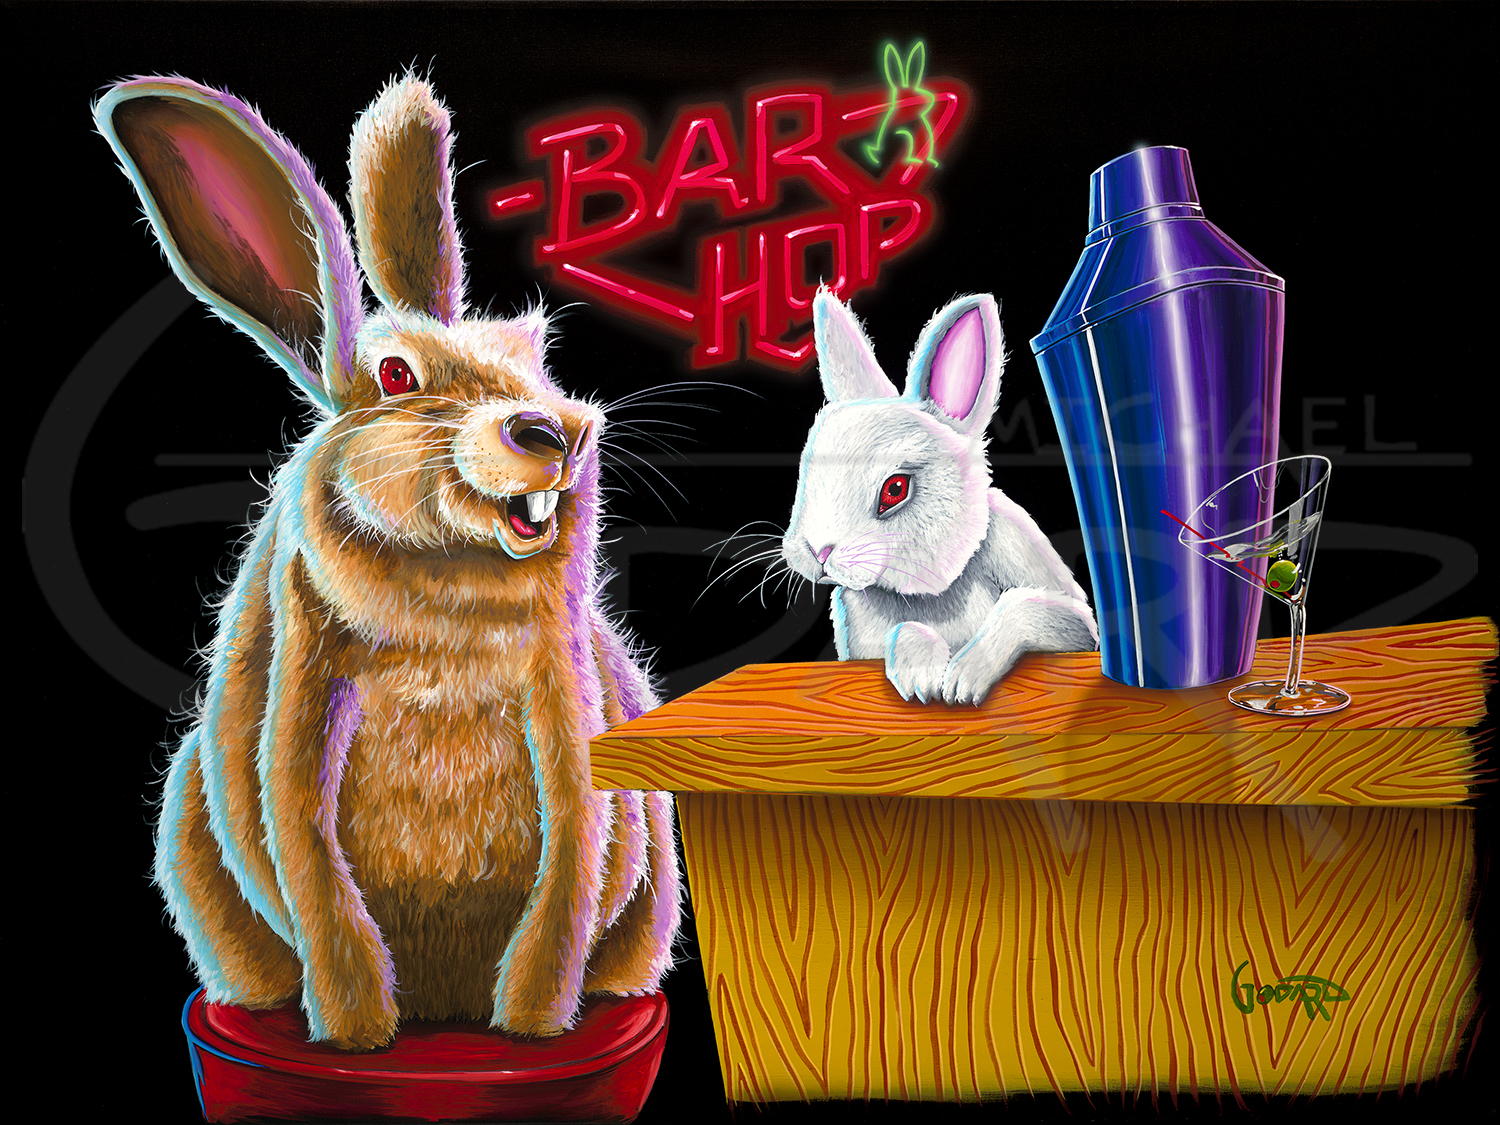 Michael Godard Bar Hop (AP)